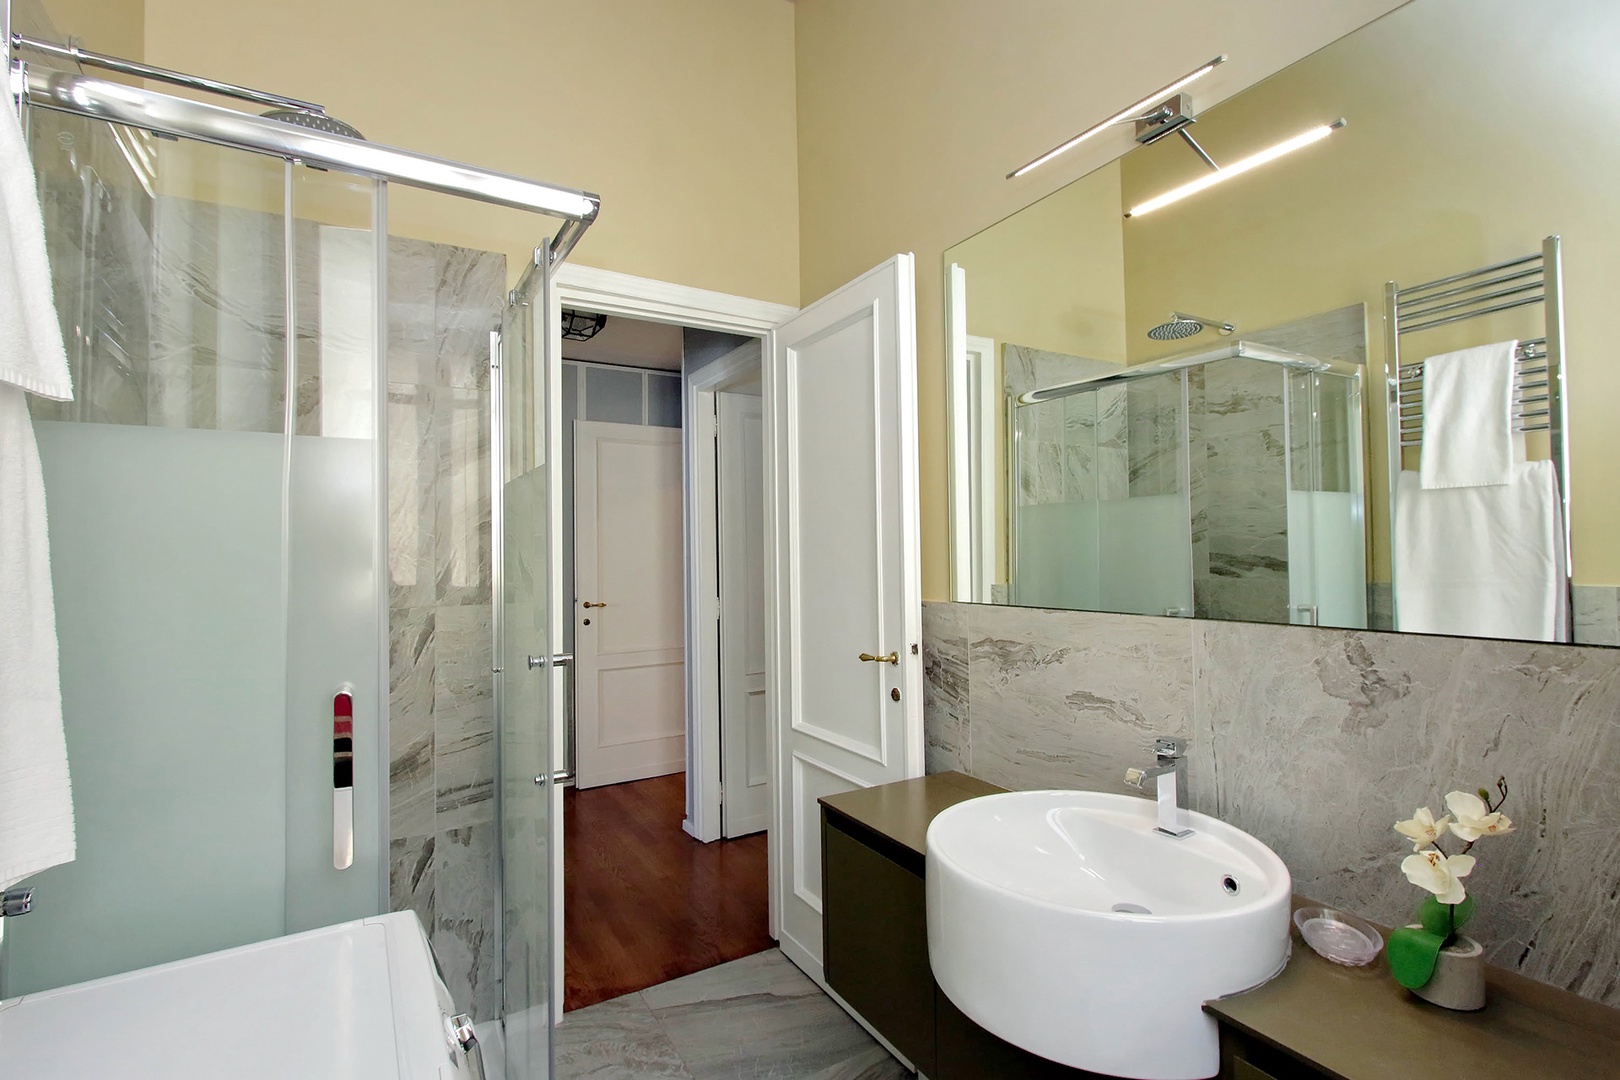 Bathroom 2 has fully enclosed glass shower with rainfall showerhead.